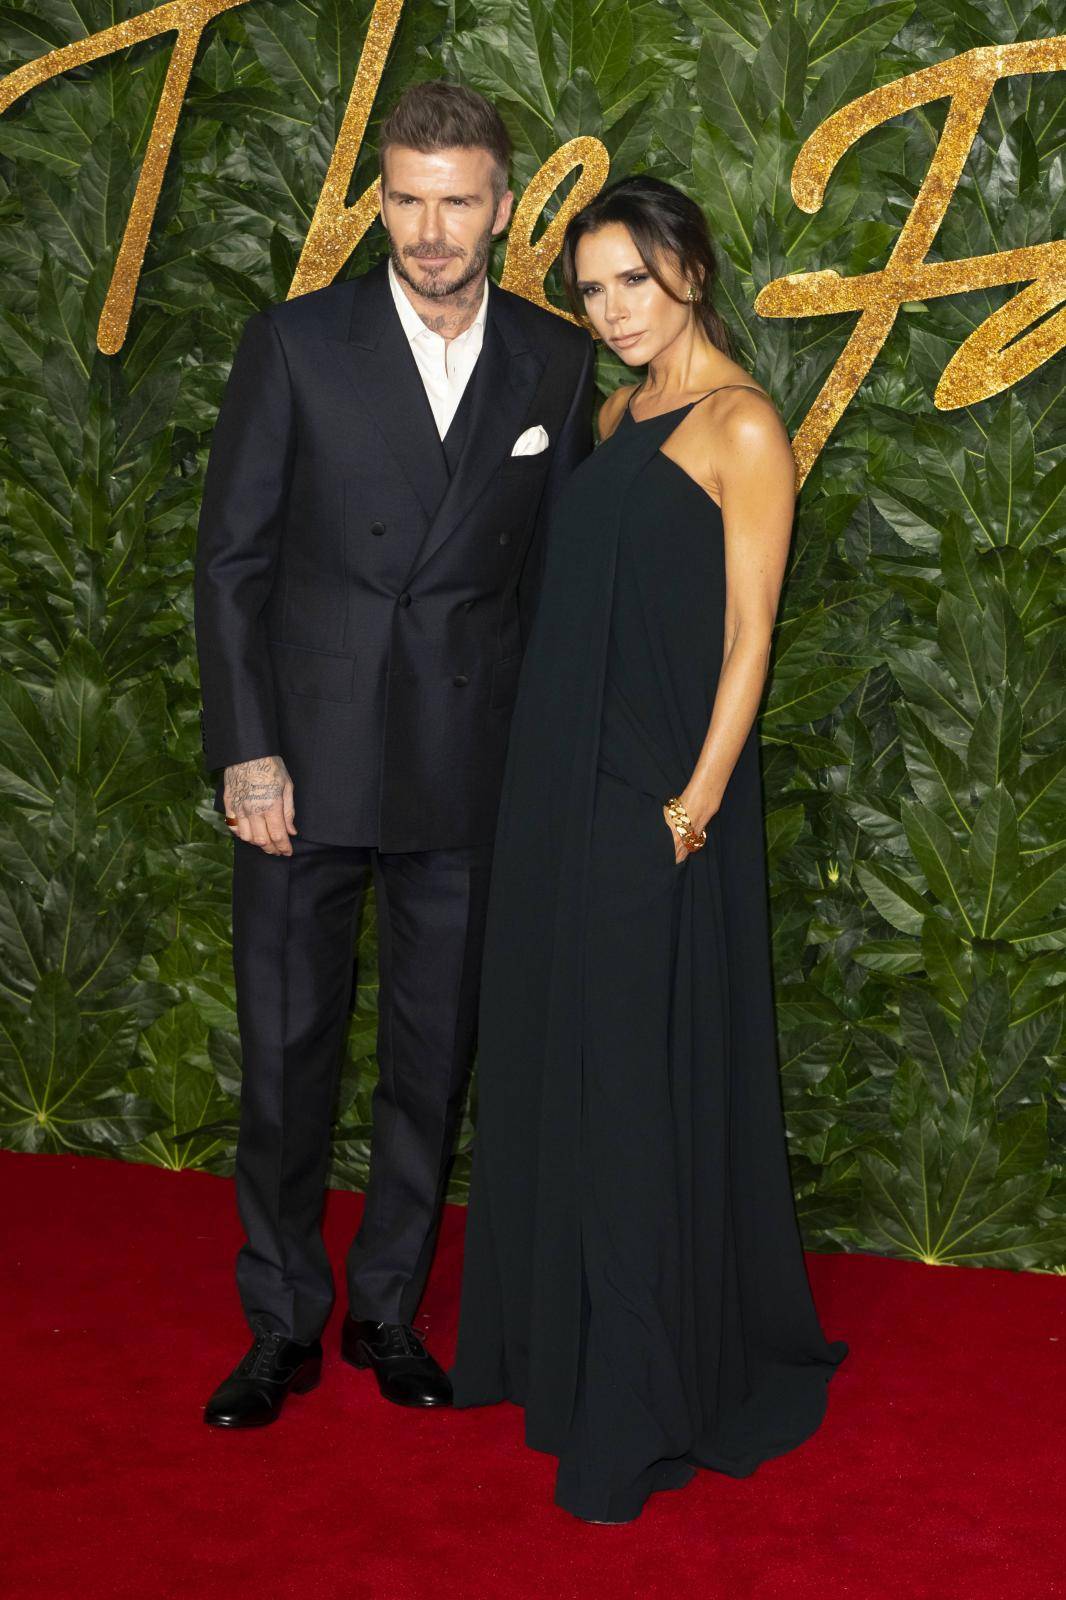 David Beckham and Victoria Beckham attend The Fashion Awards 2018 at The Royal Albert Hall. London, UK. 10/12/2018